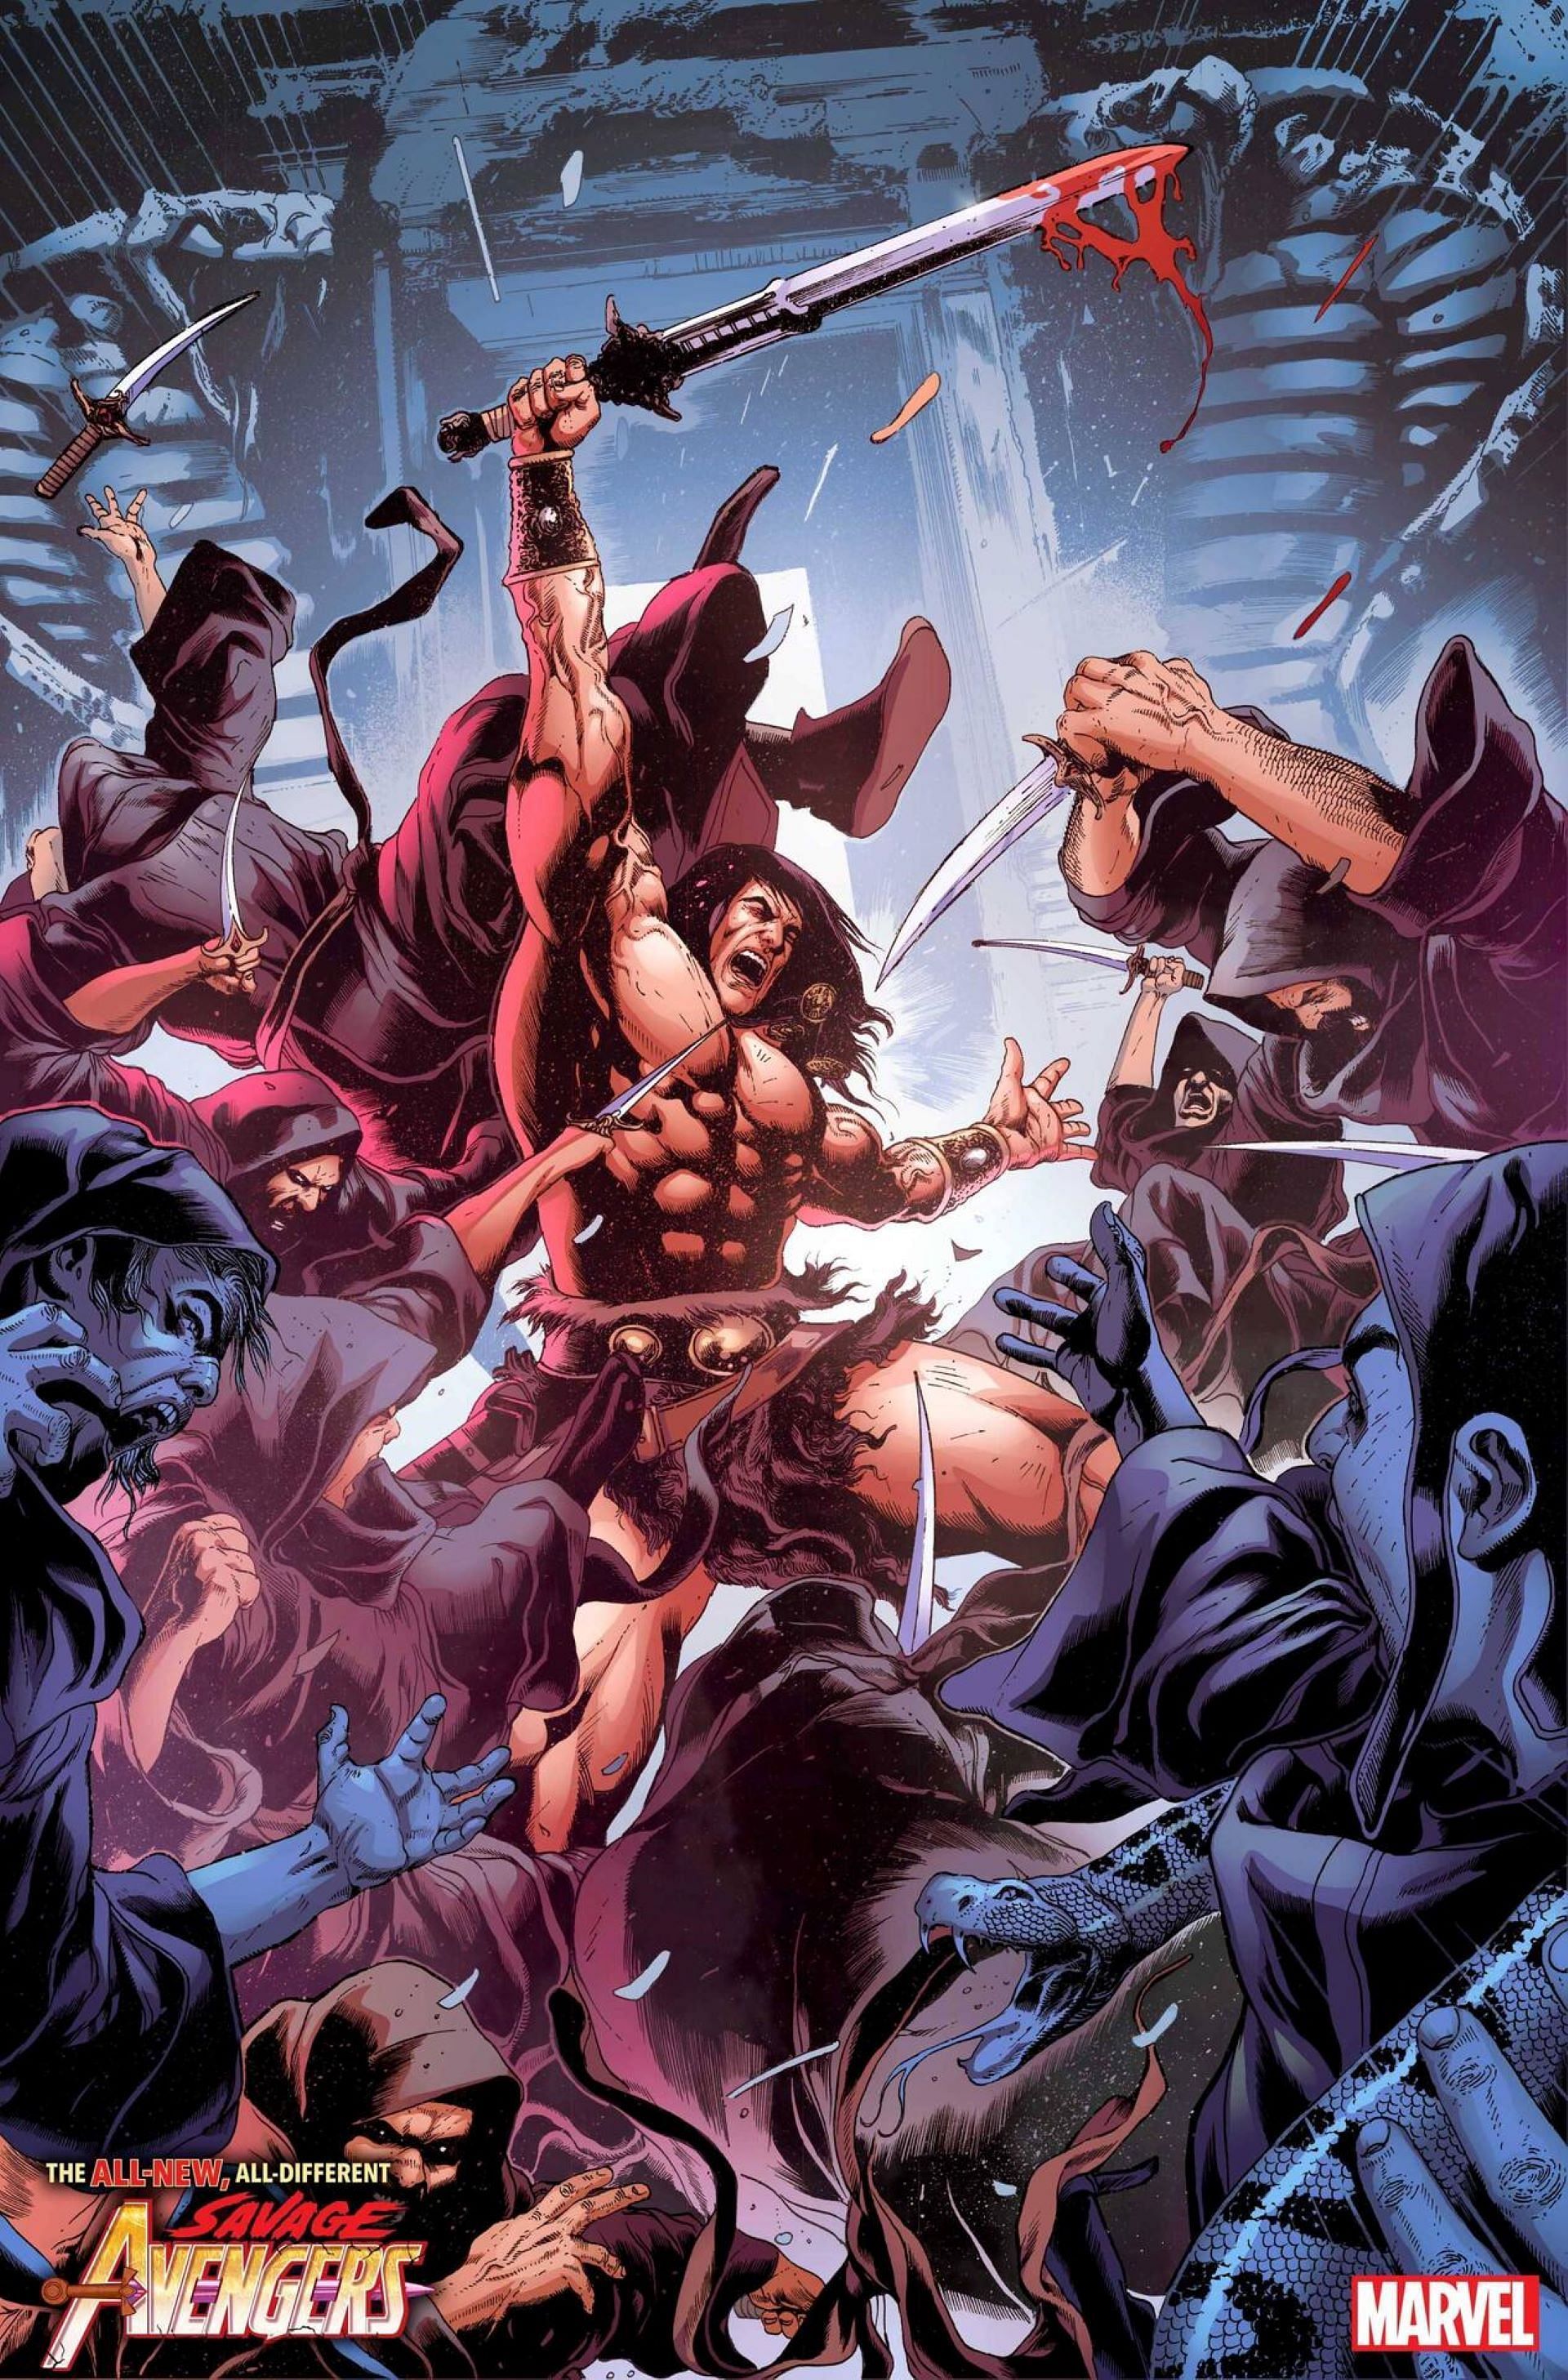 Cover of Savage Avengers #1 (Image via Marvel)